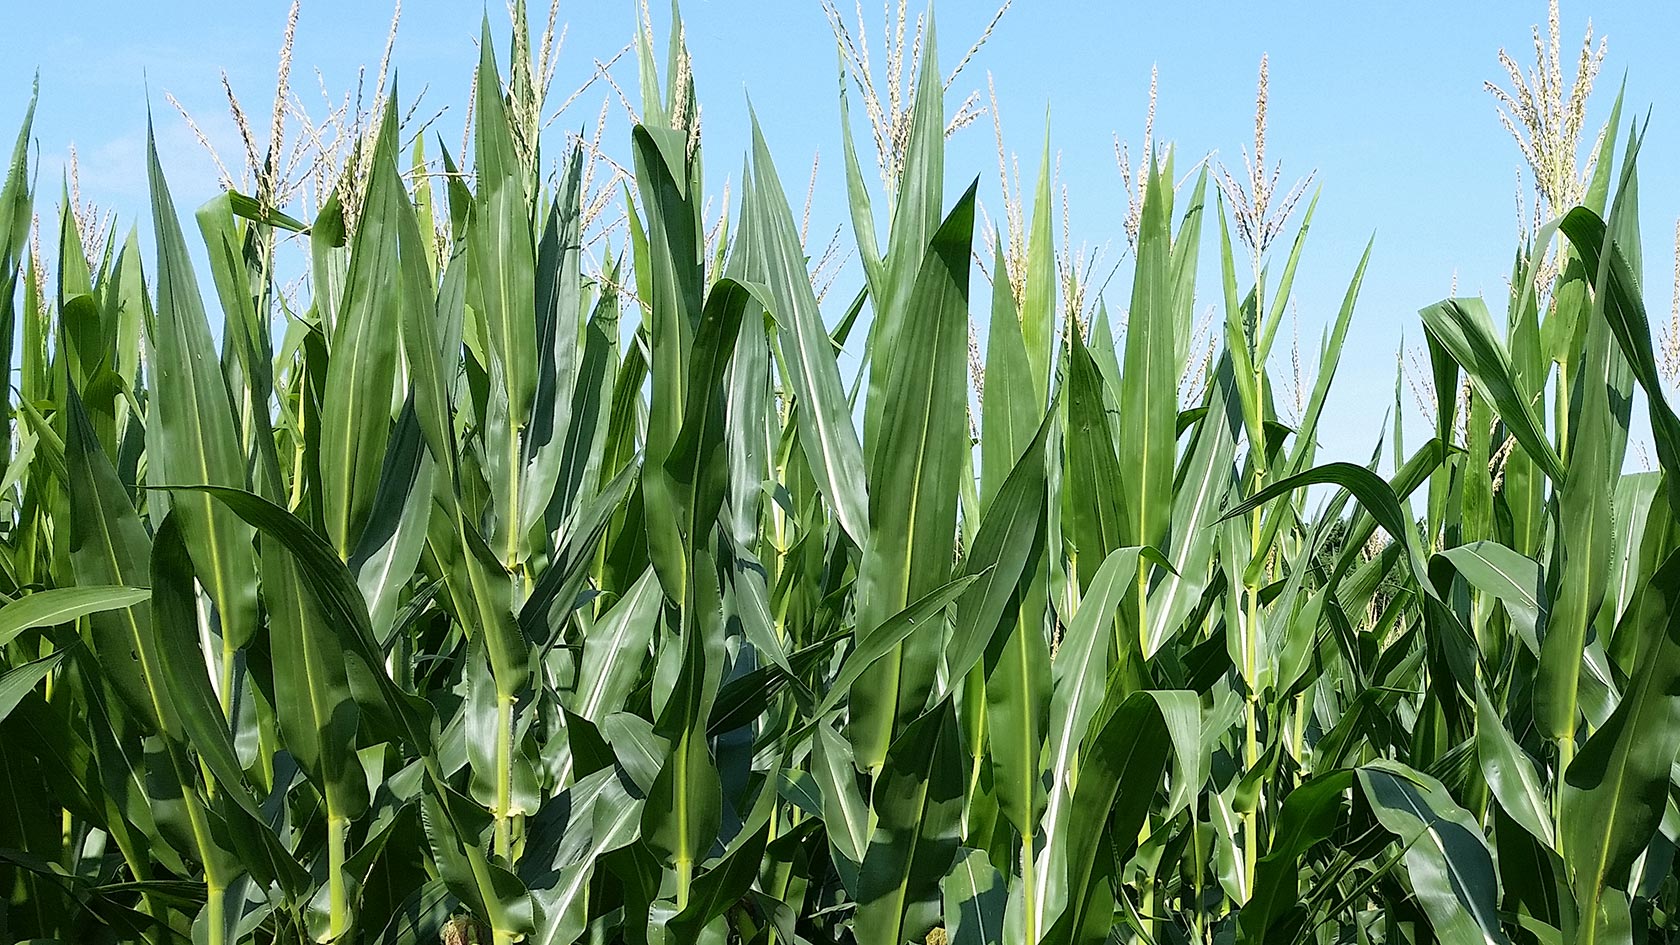 Photo of corn field